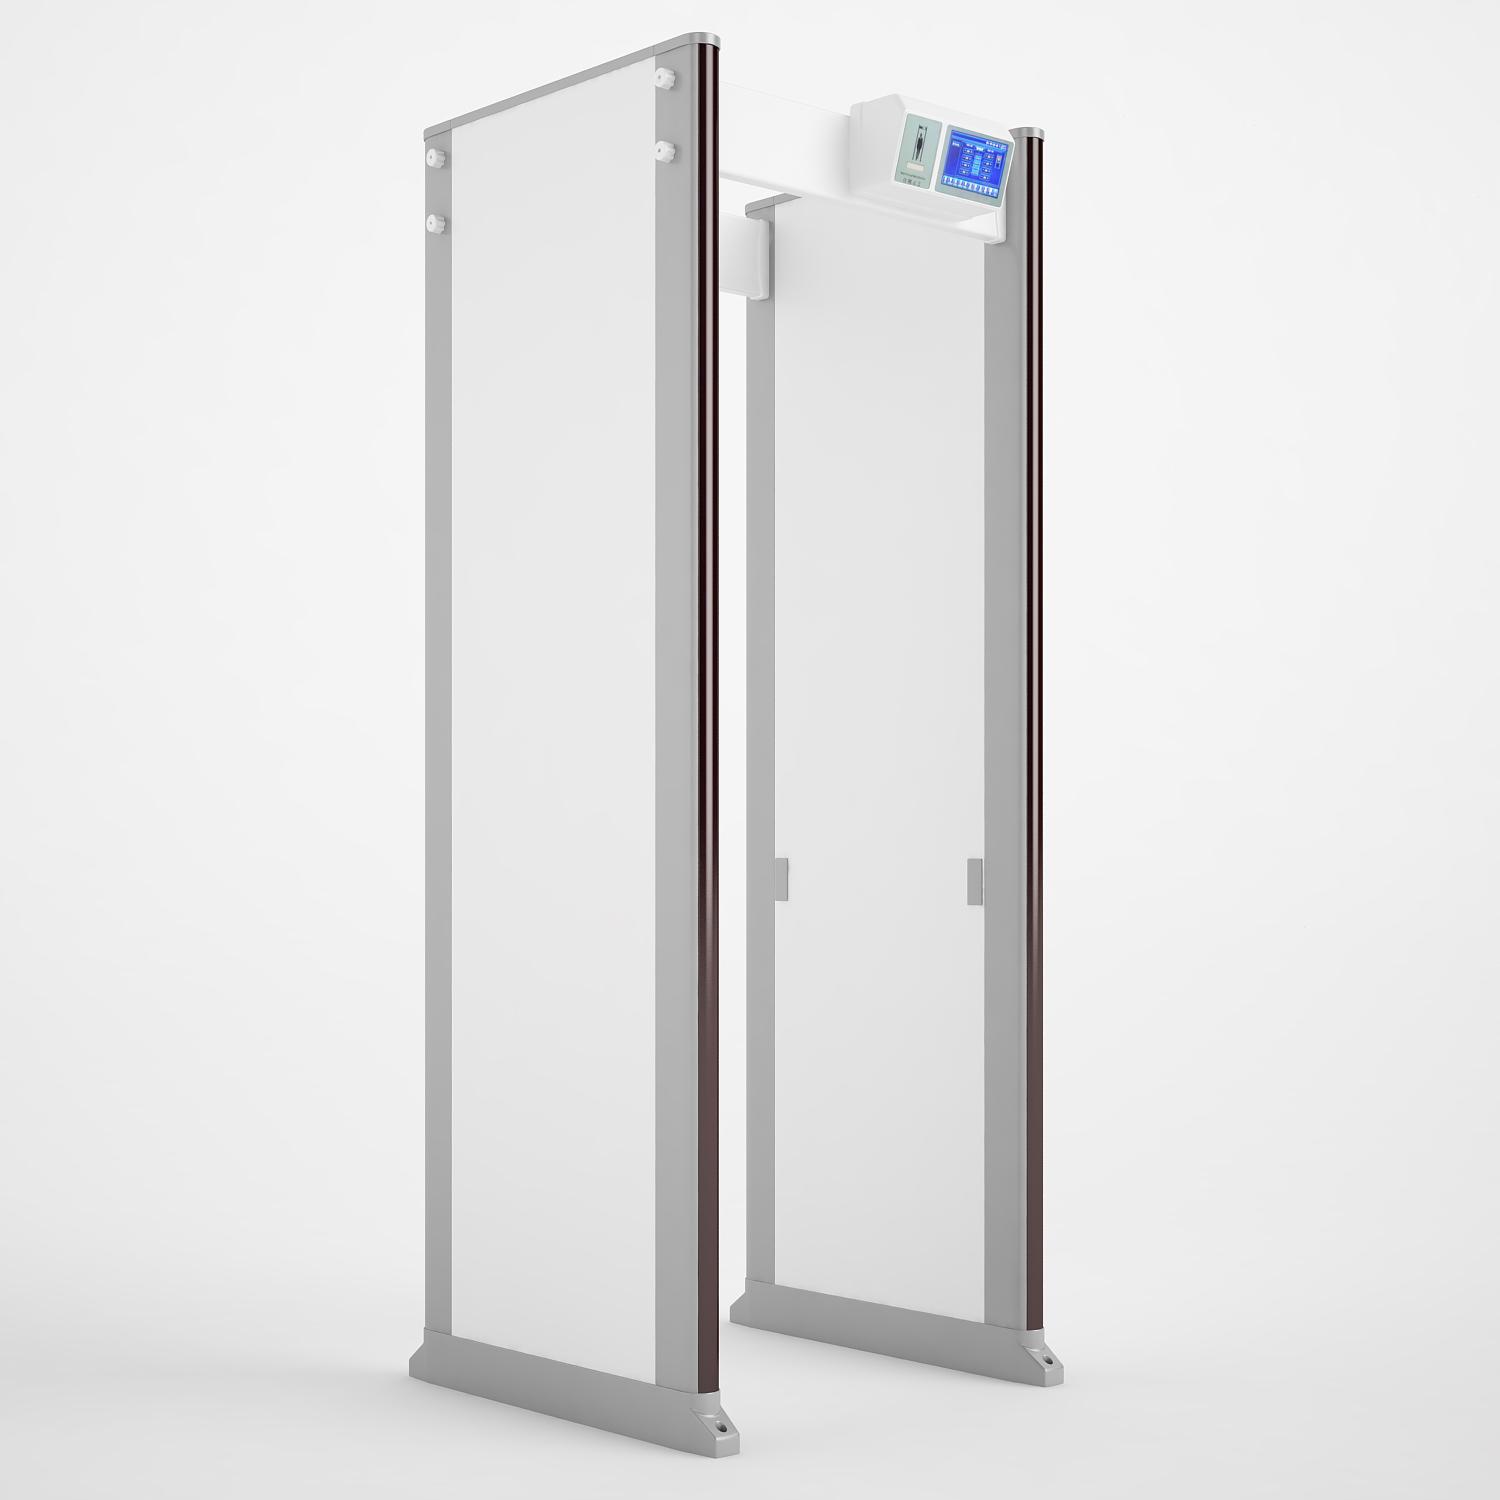 Product Tentronix Door Frame Metal Detector, 12 zones – Tentronix 🛡 – CCTV, Security Camera, Video Surveillance Products image